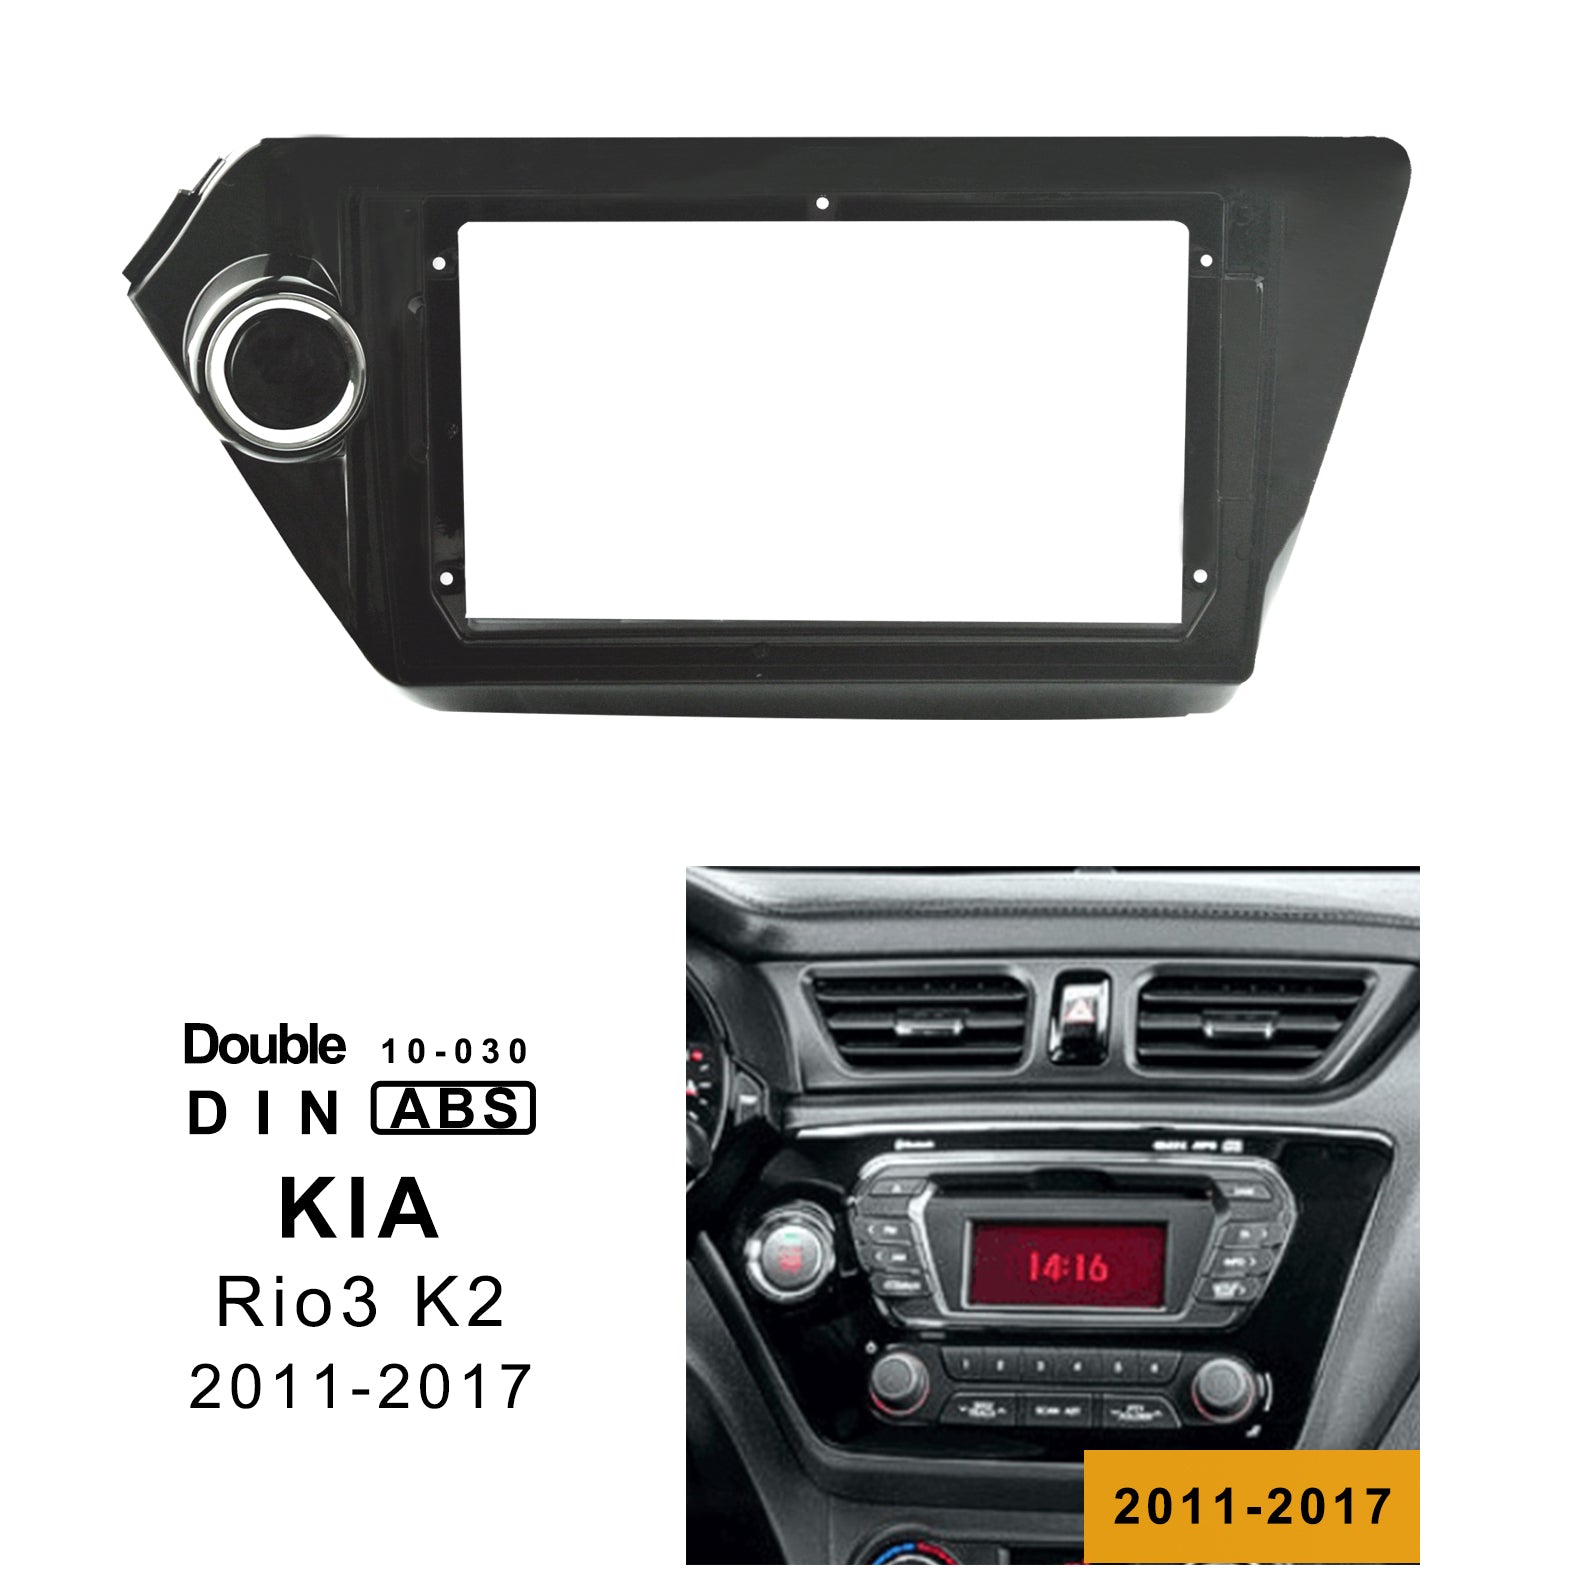 Double Din car Radio In-Dash Mounting Frame for Kia  RIO 3 K2 2011 -2017 | car head unit Radio Installation fascia Facia for 9 inch car stereo Radio in Kia  RIO 3 K2 2011 -2017 - lexxson official store